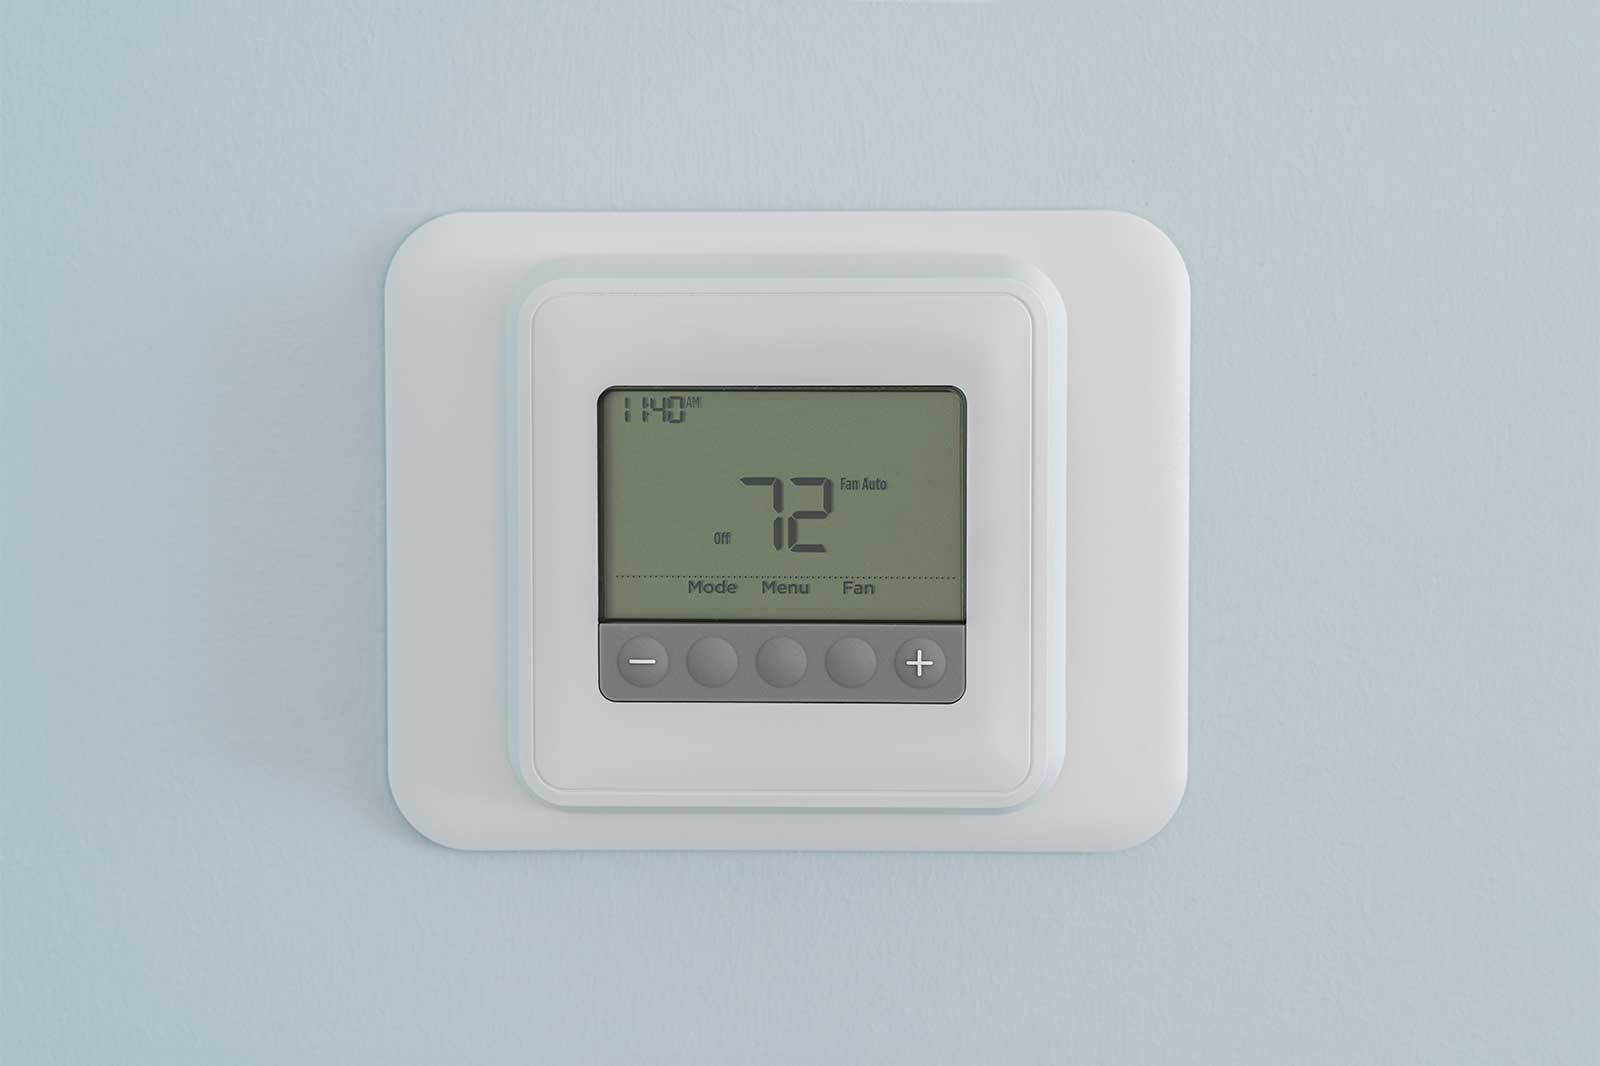 Thermostat-problem